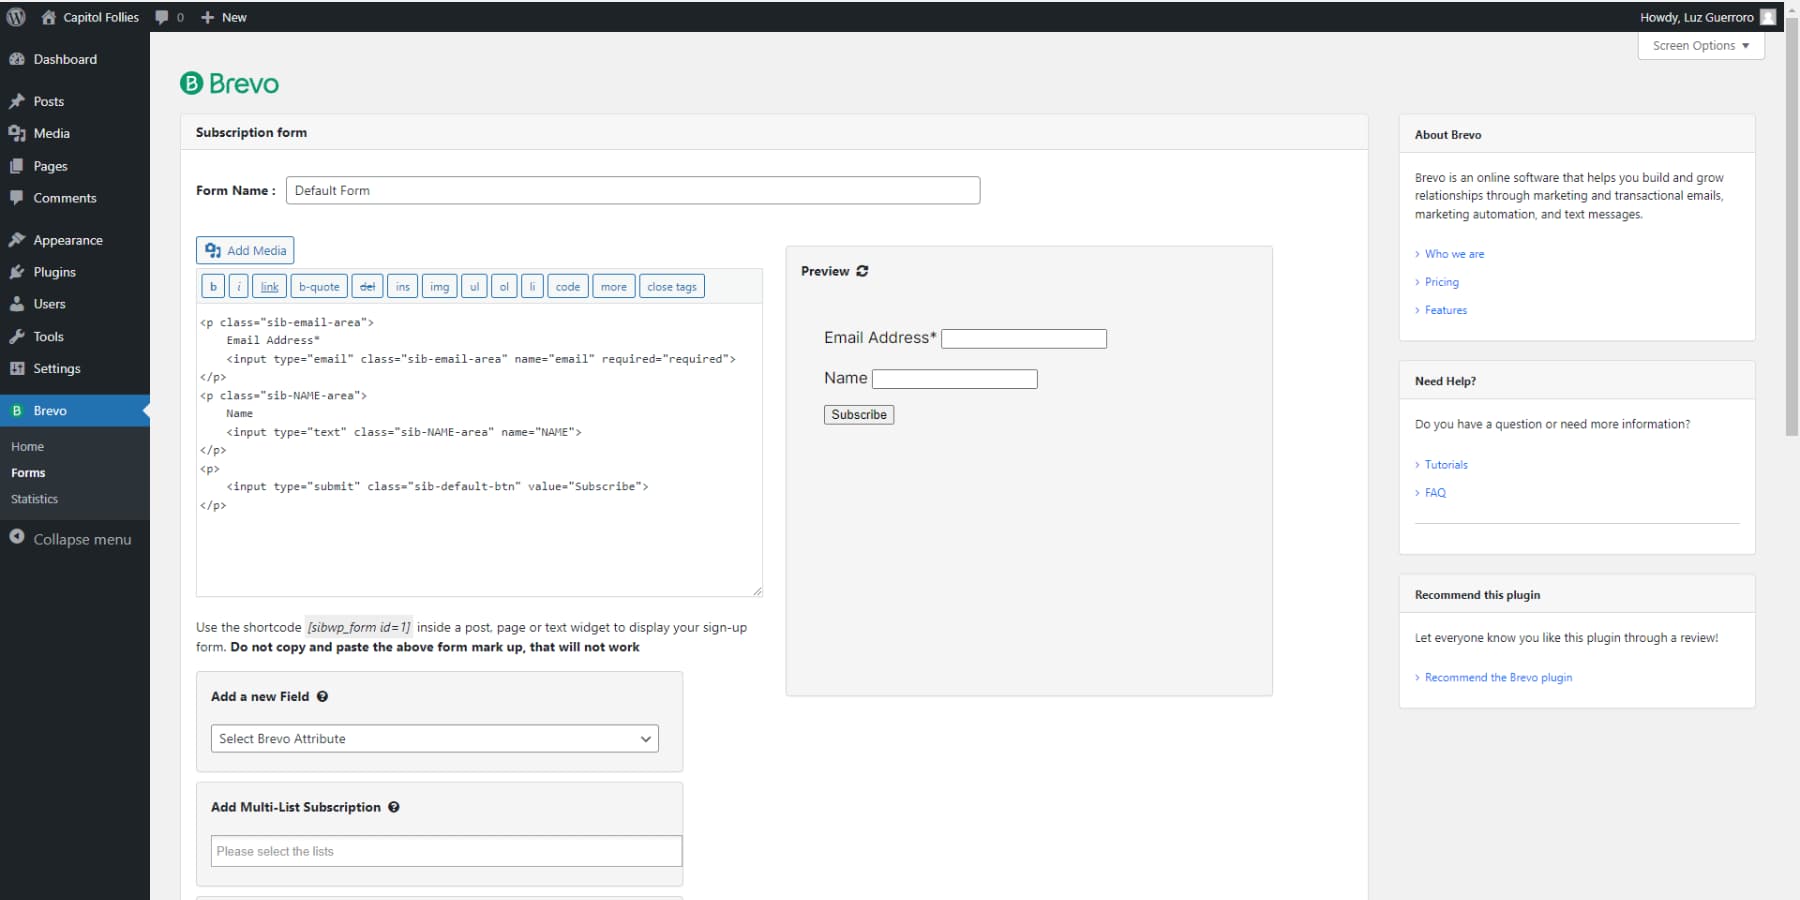 A screenshot of Brevo's WordPress Plugin's user interface